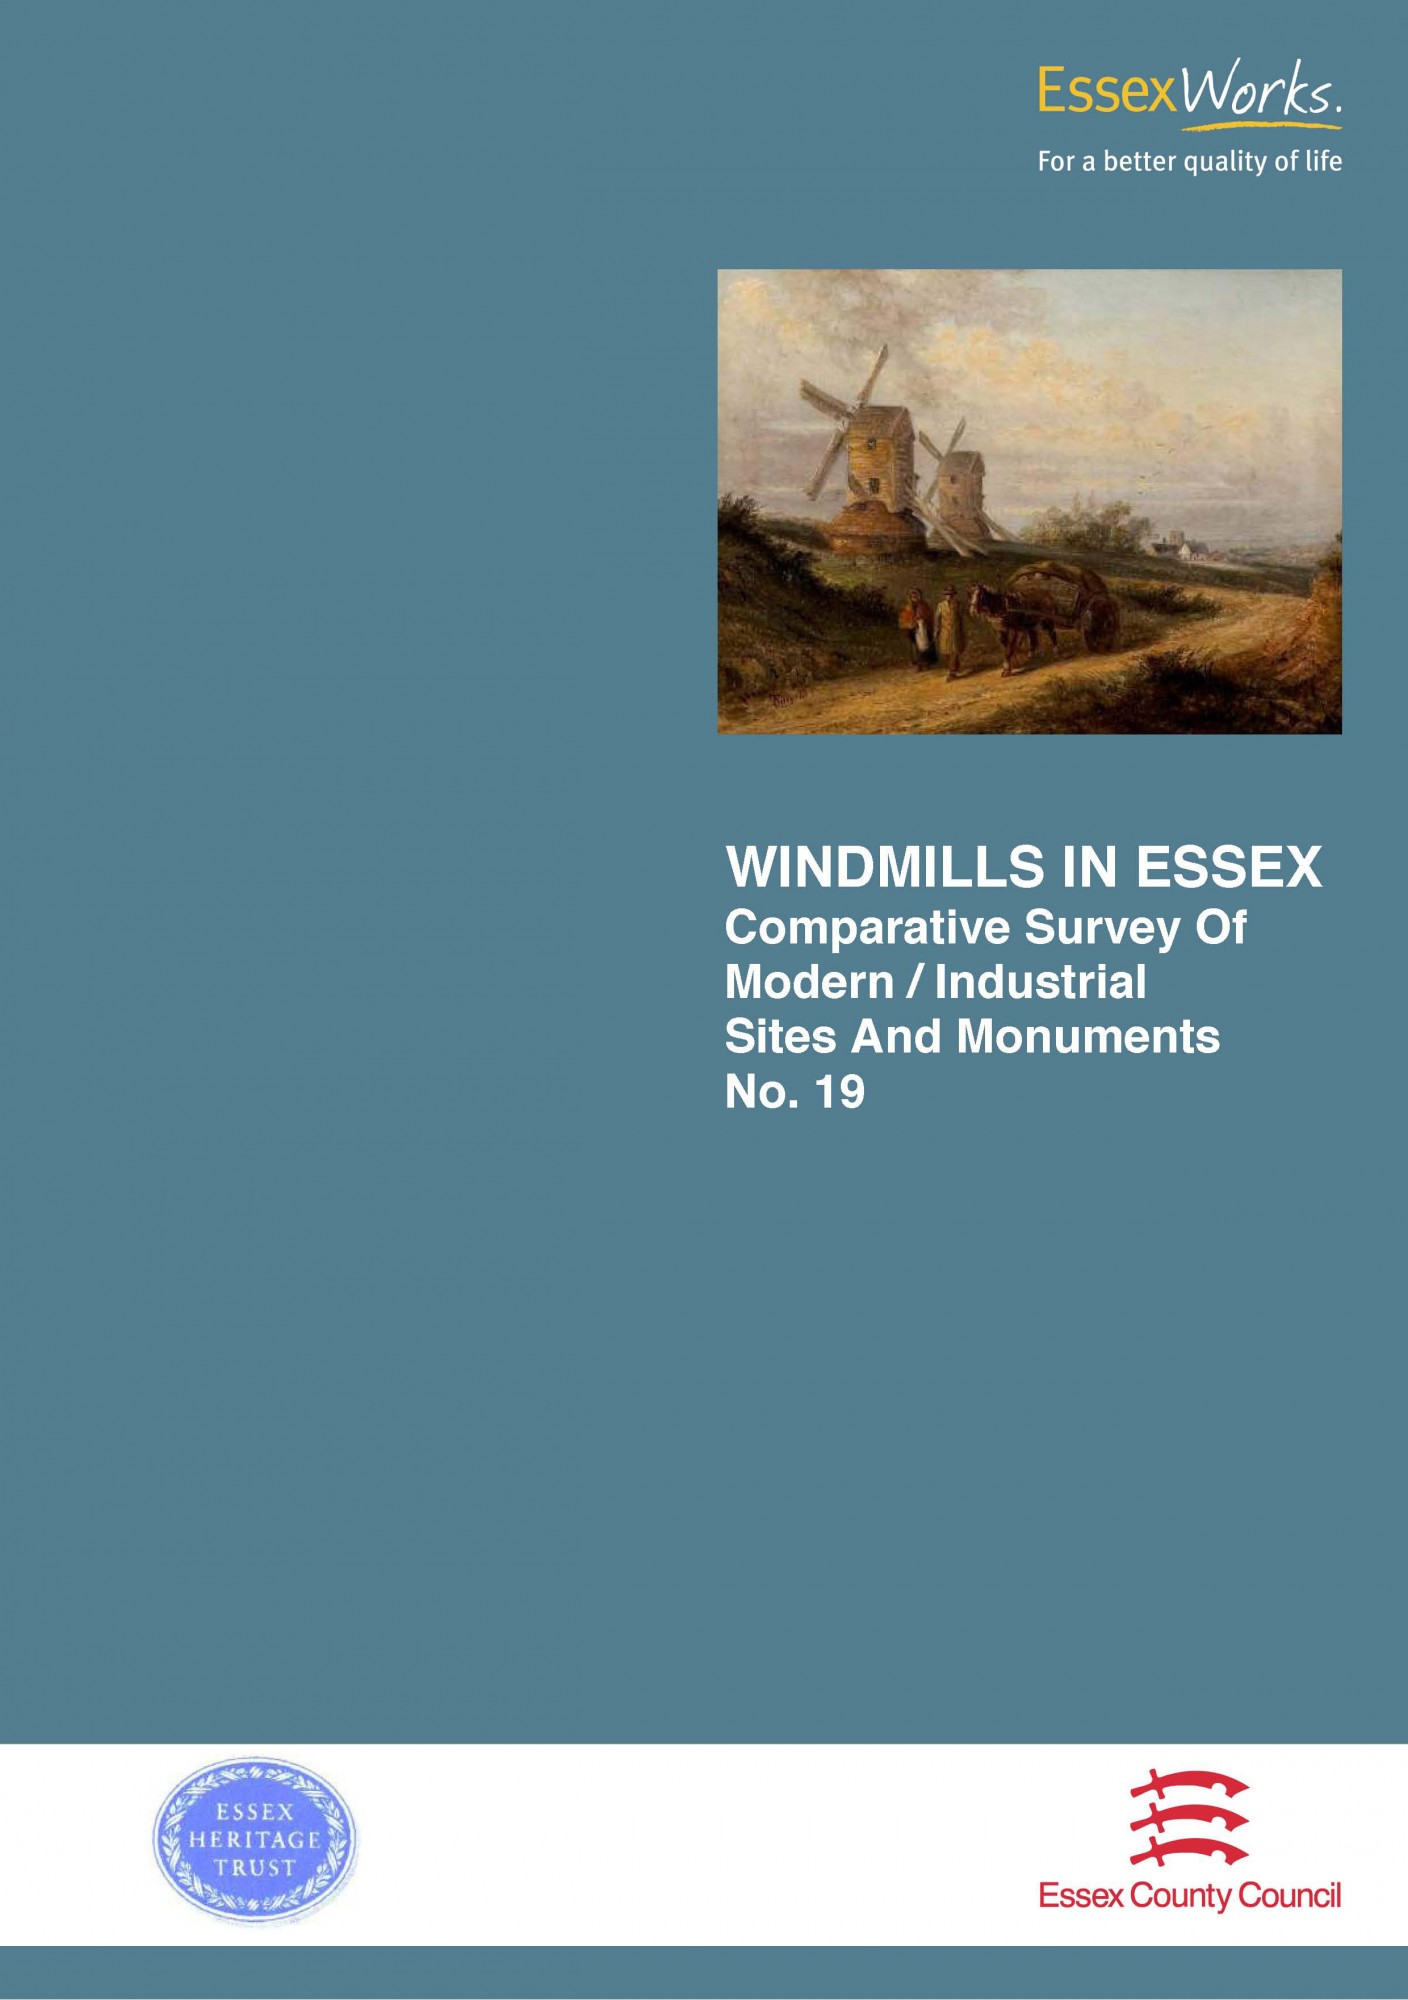 Windmills in Essex (2012) eiag illustration 1